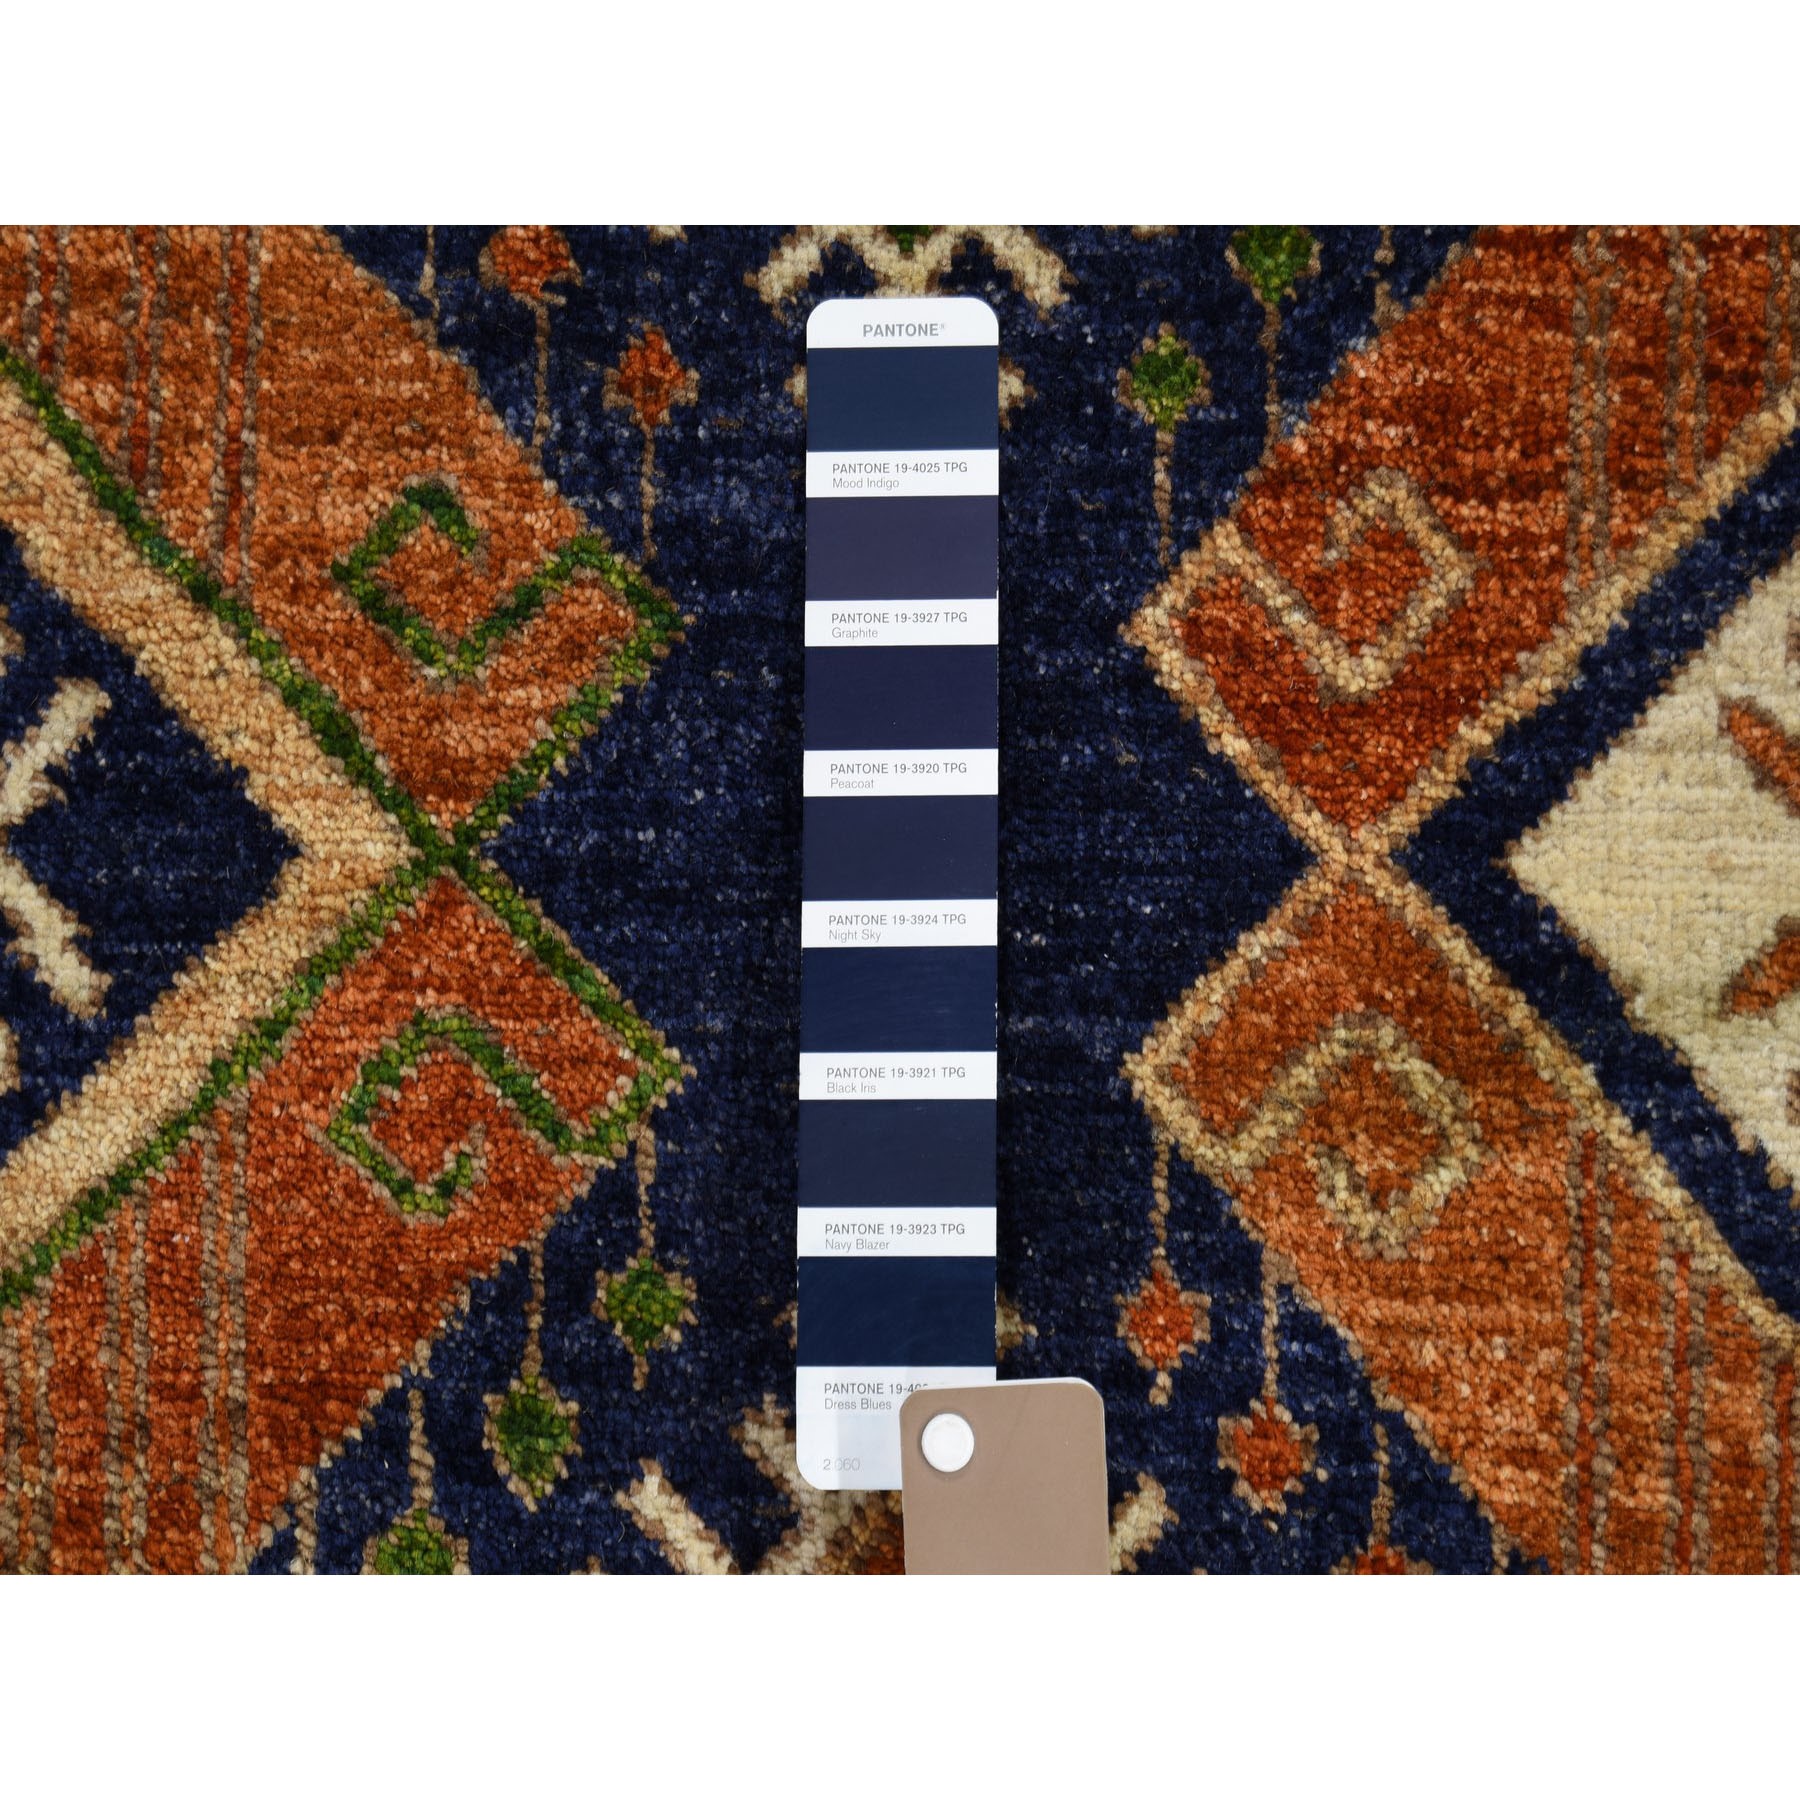 9-x12-5  Blue Afghan Ersari Geometric Design Pure Wool Hand-Knotted Oriental Rug 